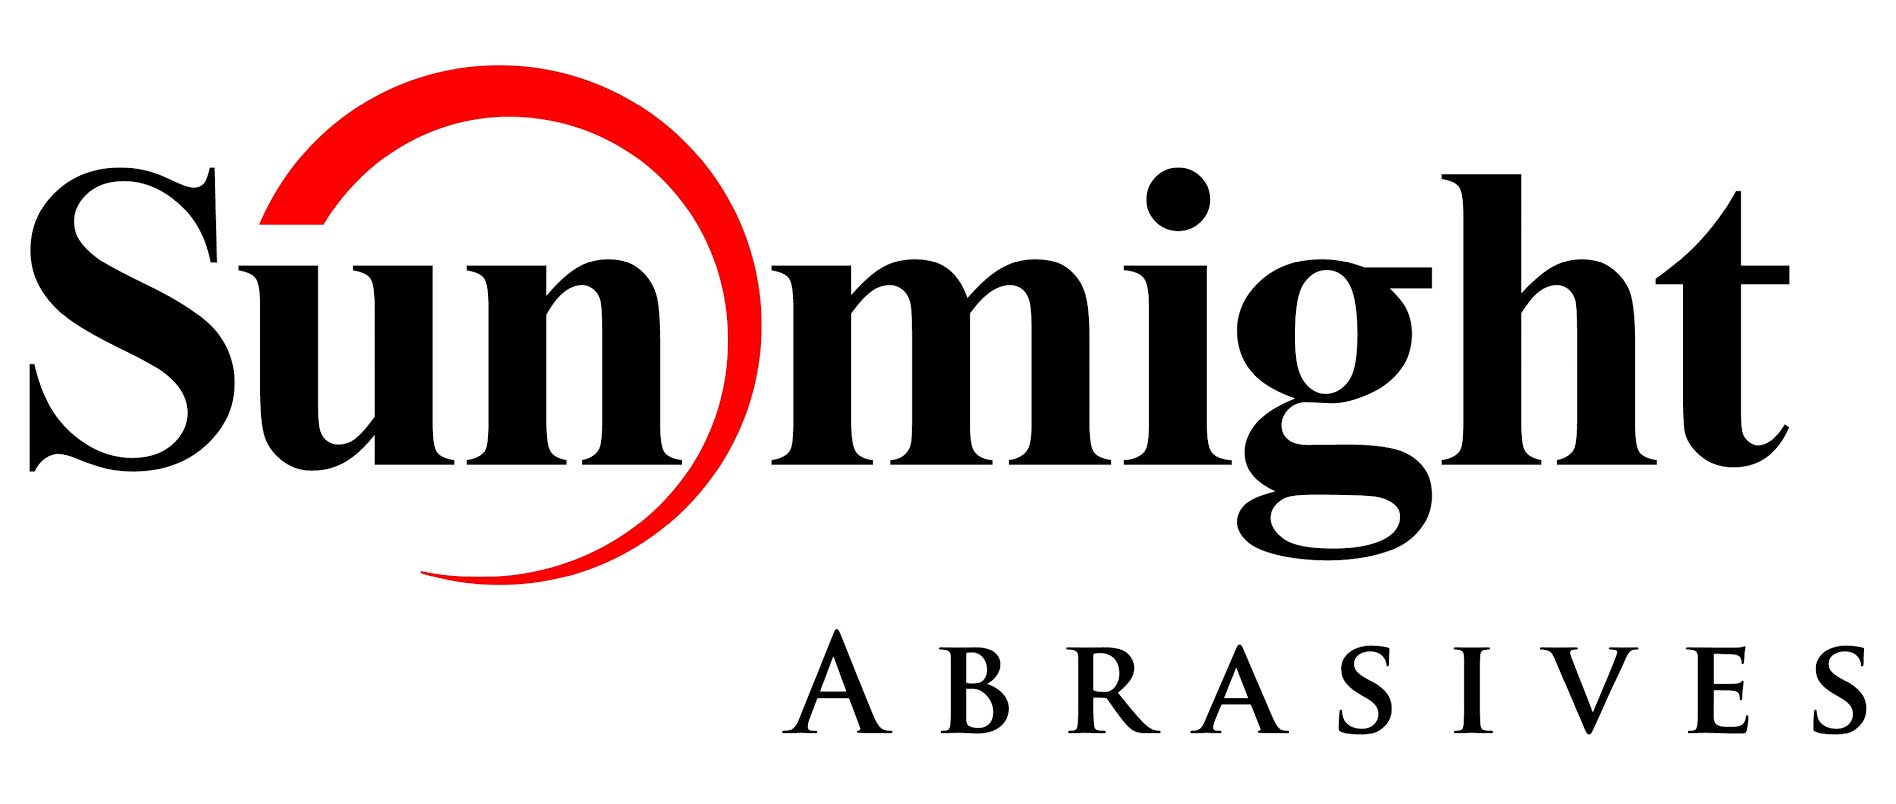 Sunmight logo